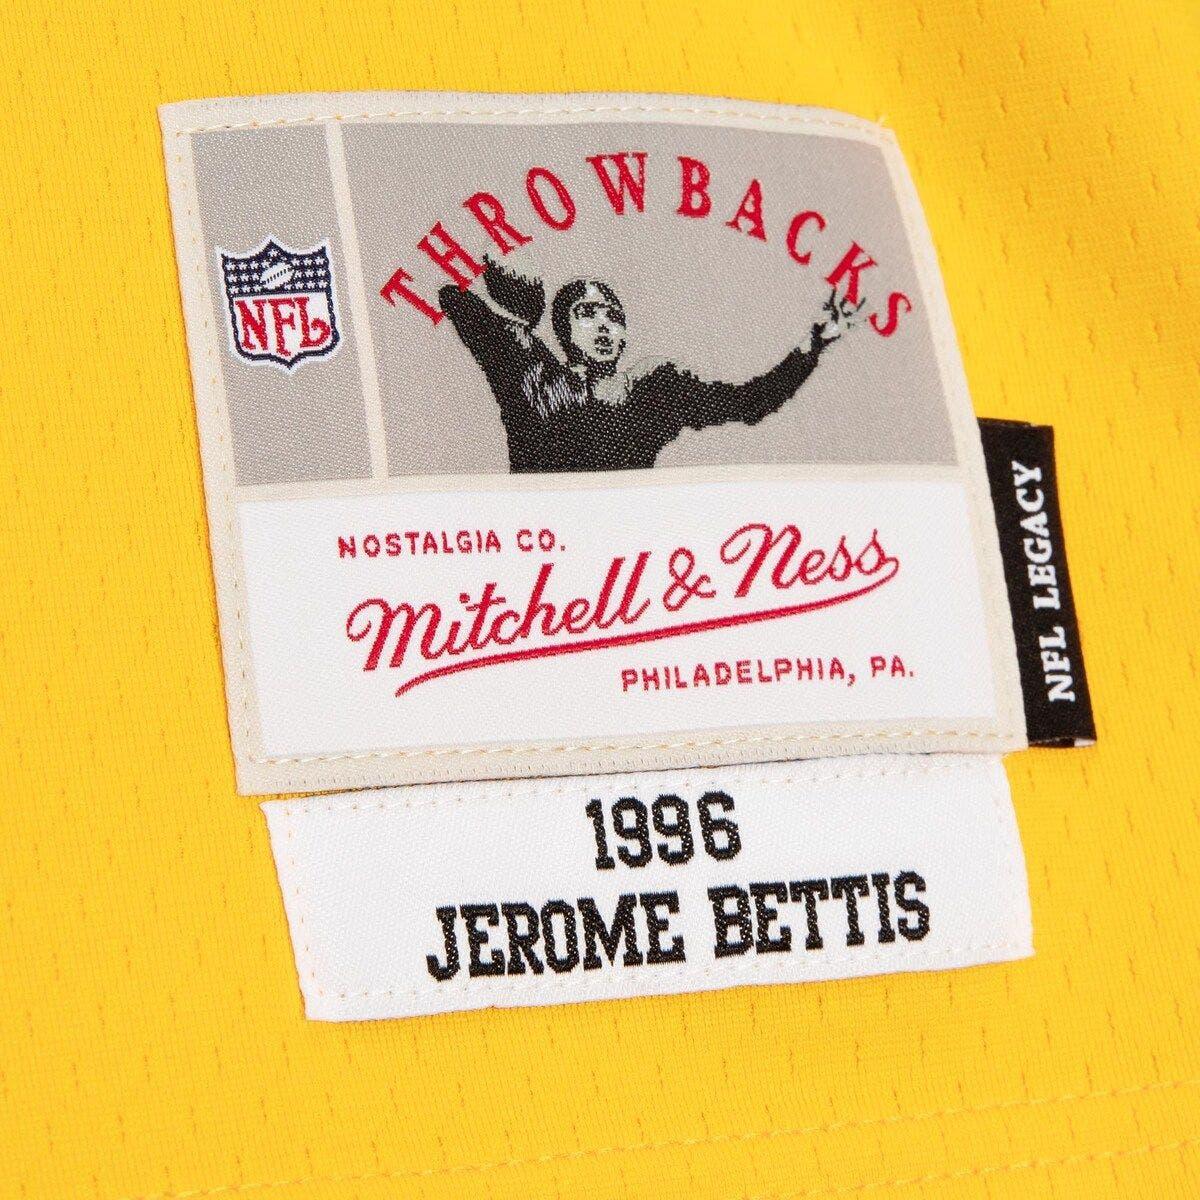 Steelers Jerome Bettis Mitchell & Ness Legacy Jersey